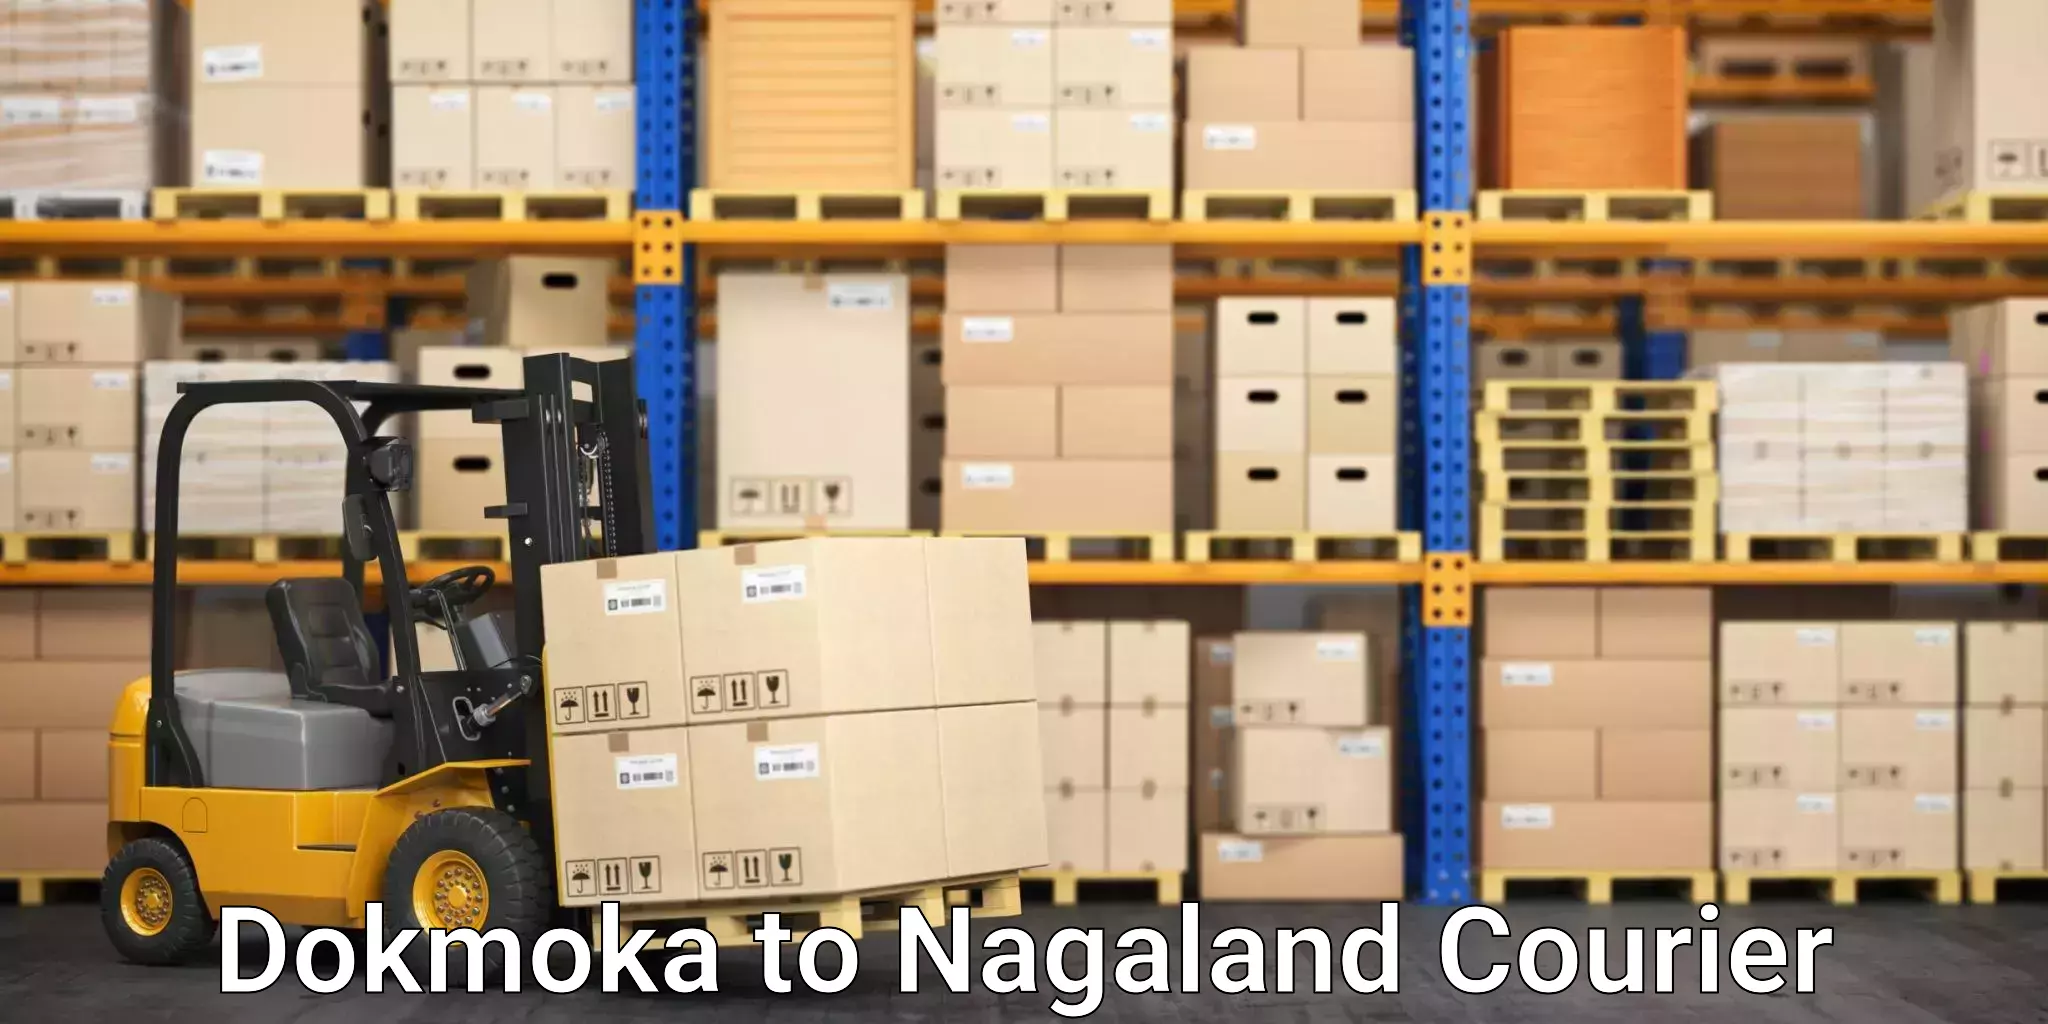 International courier networks Dokmoka to Nagaland